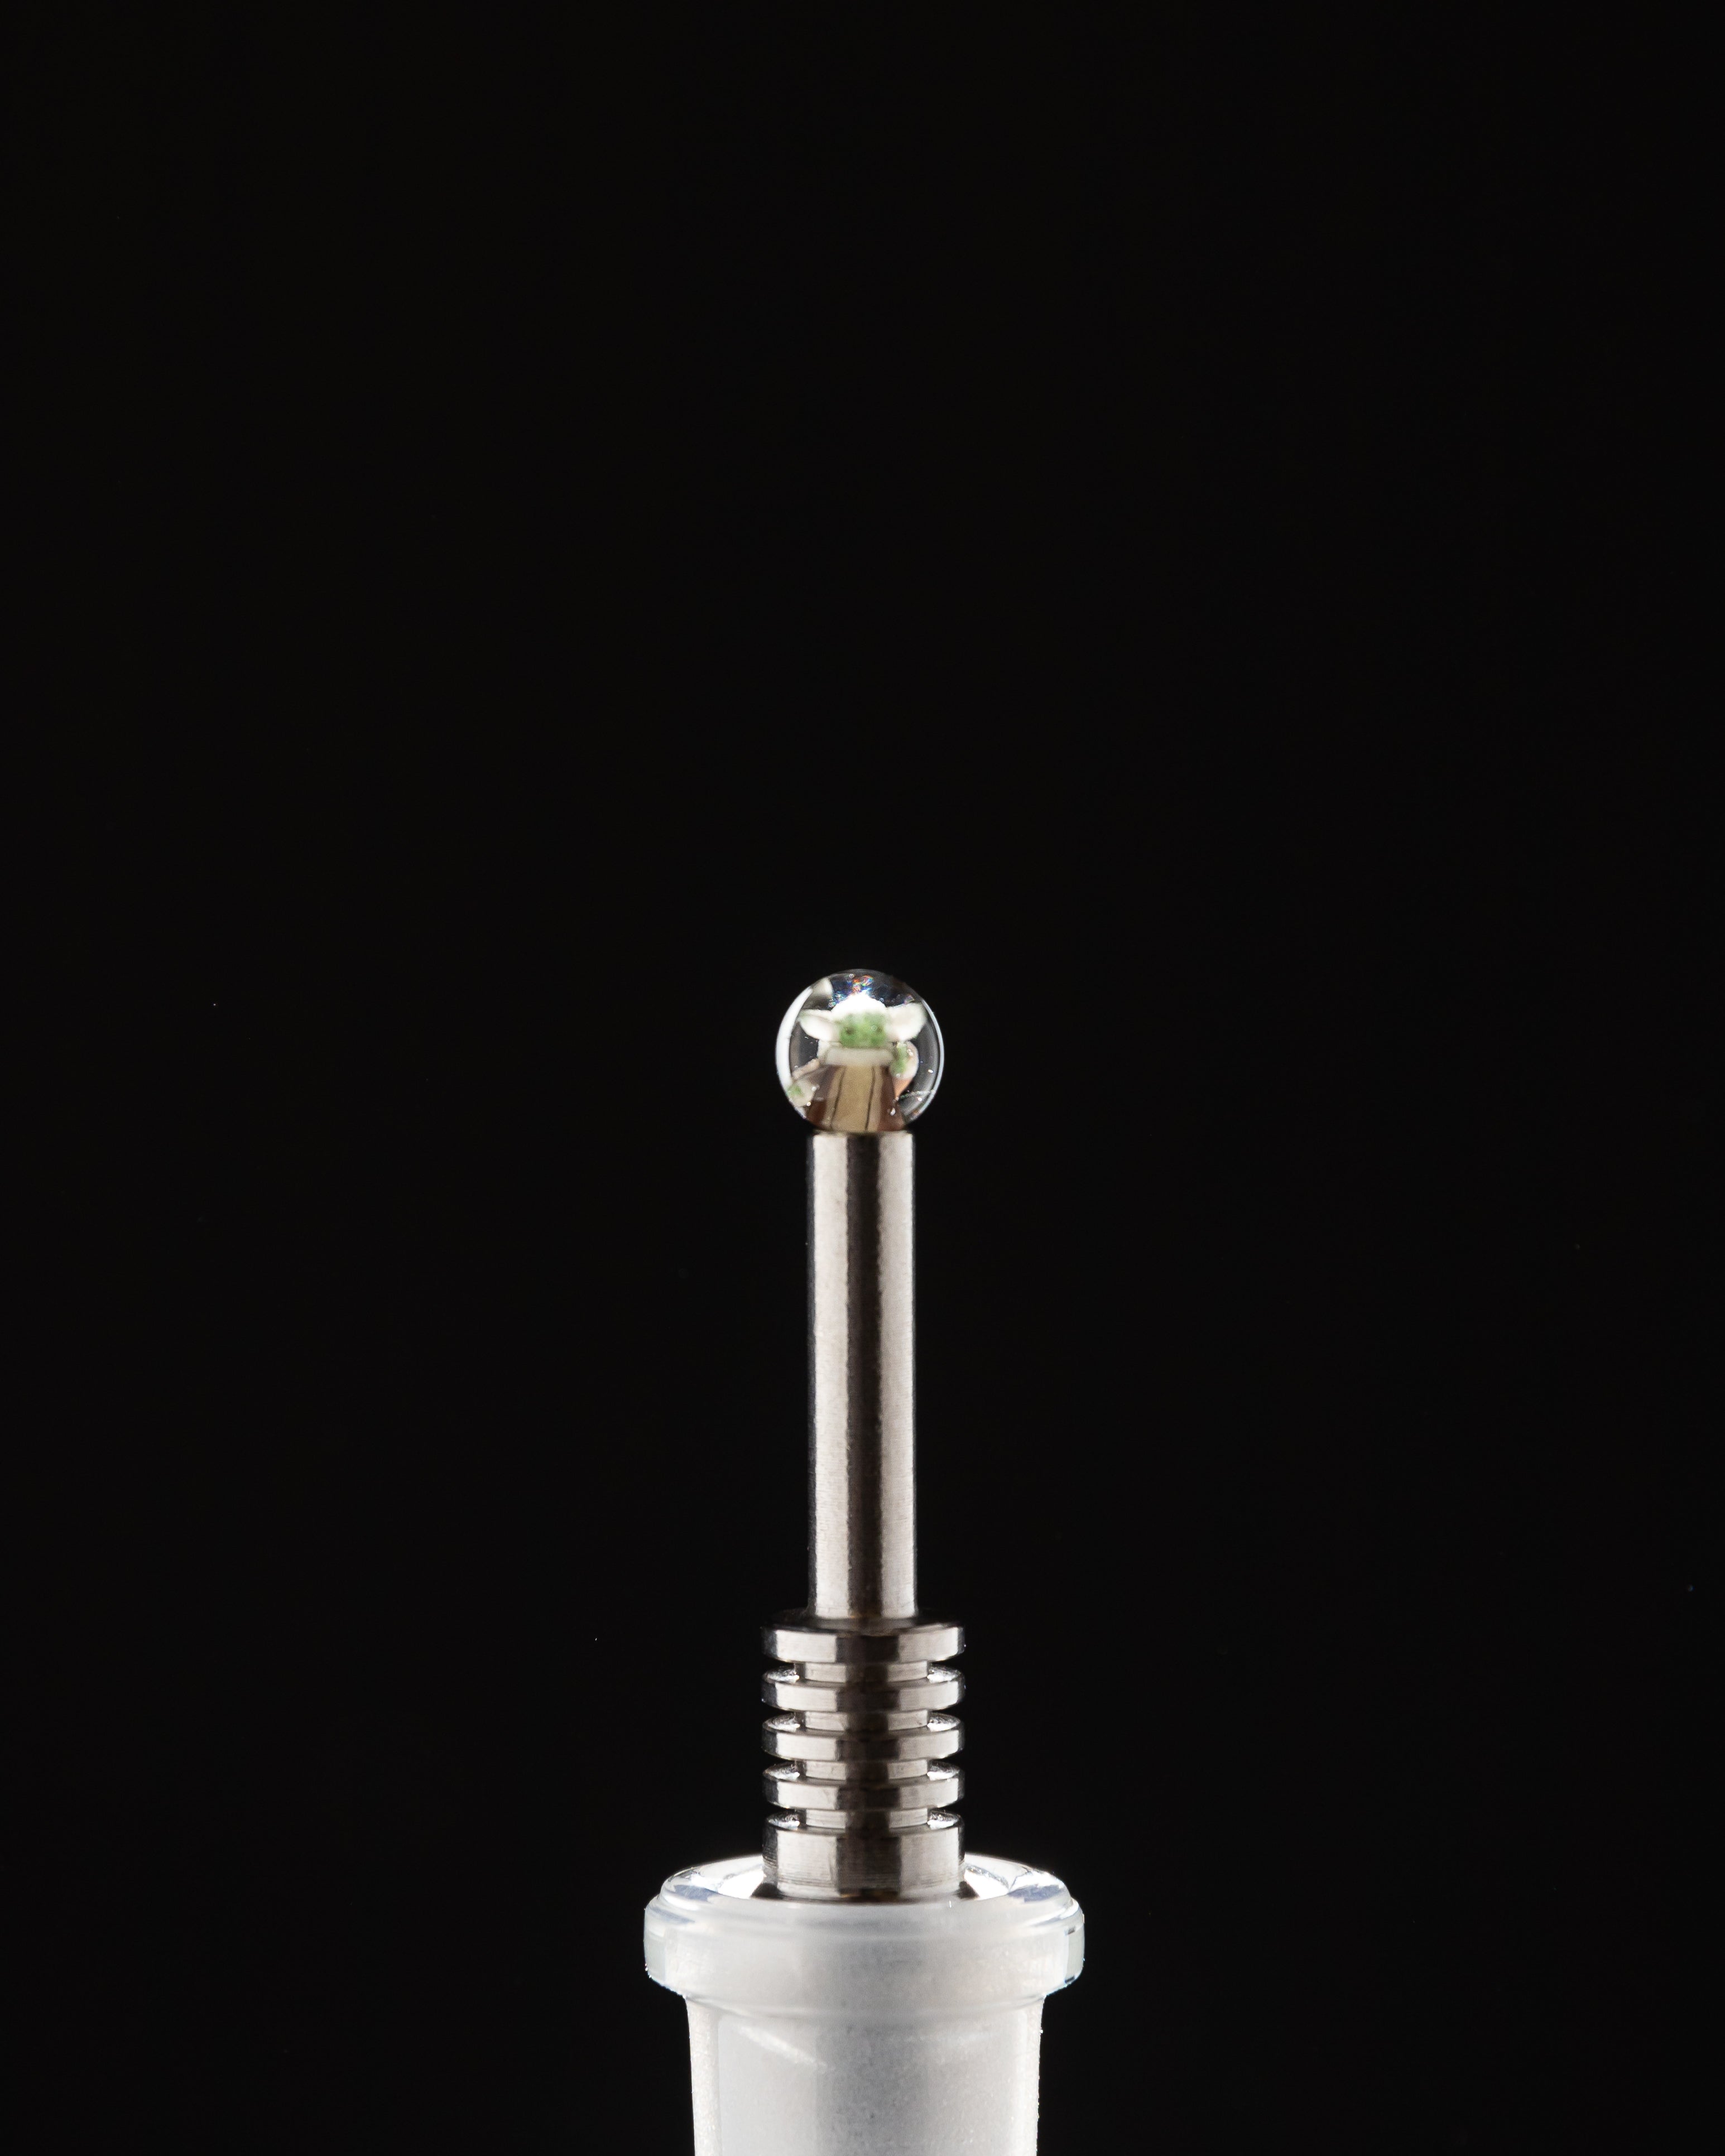 Steve Hulsebos Glass - Milli Terp Pearl 6mm (Baby Yoda)